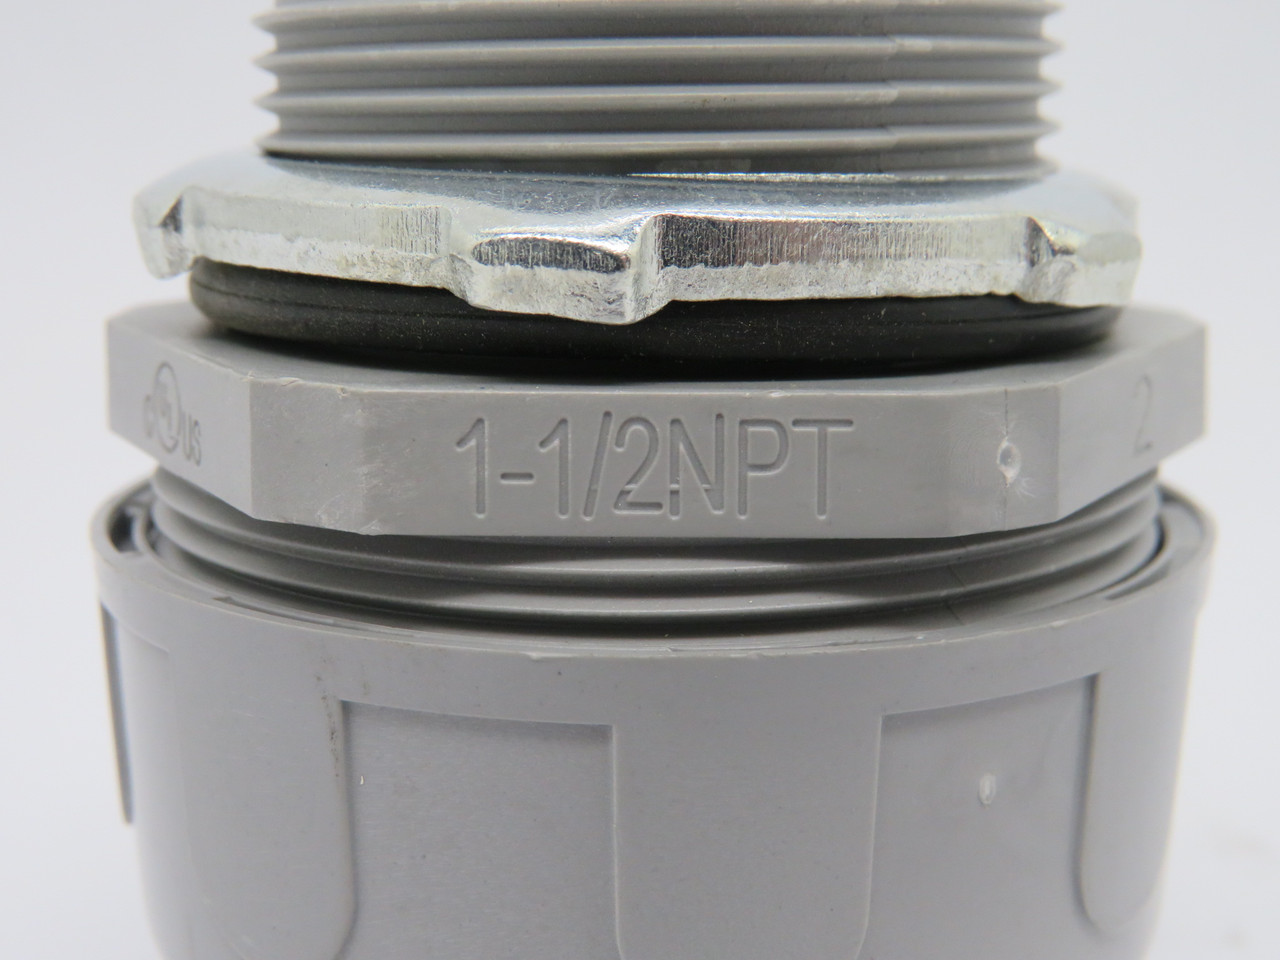 Superflex 88411 Liquid Tight 1-1/2"NPT Conduit Connector USED